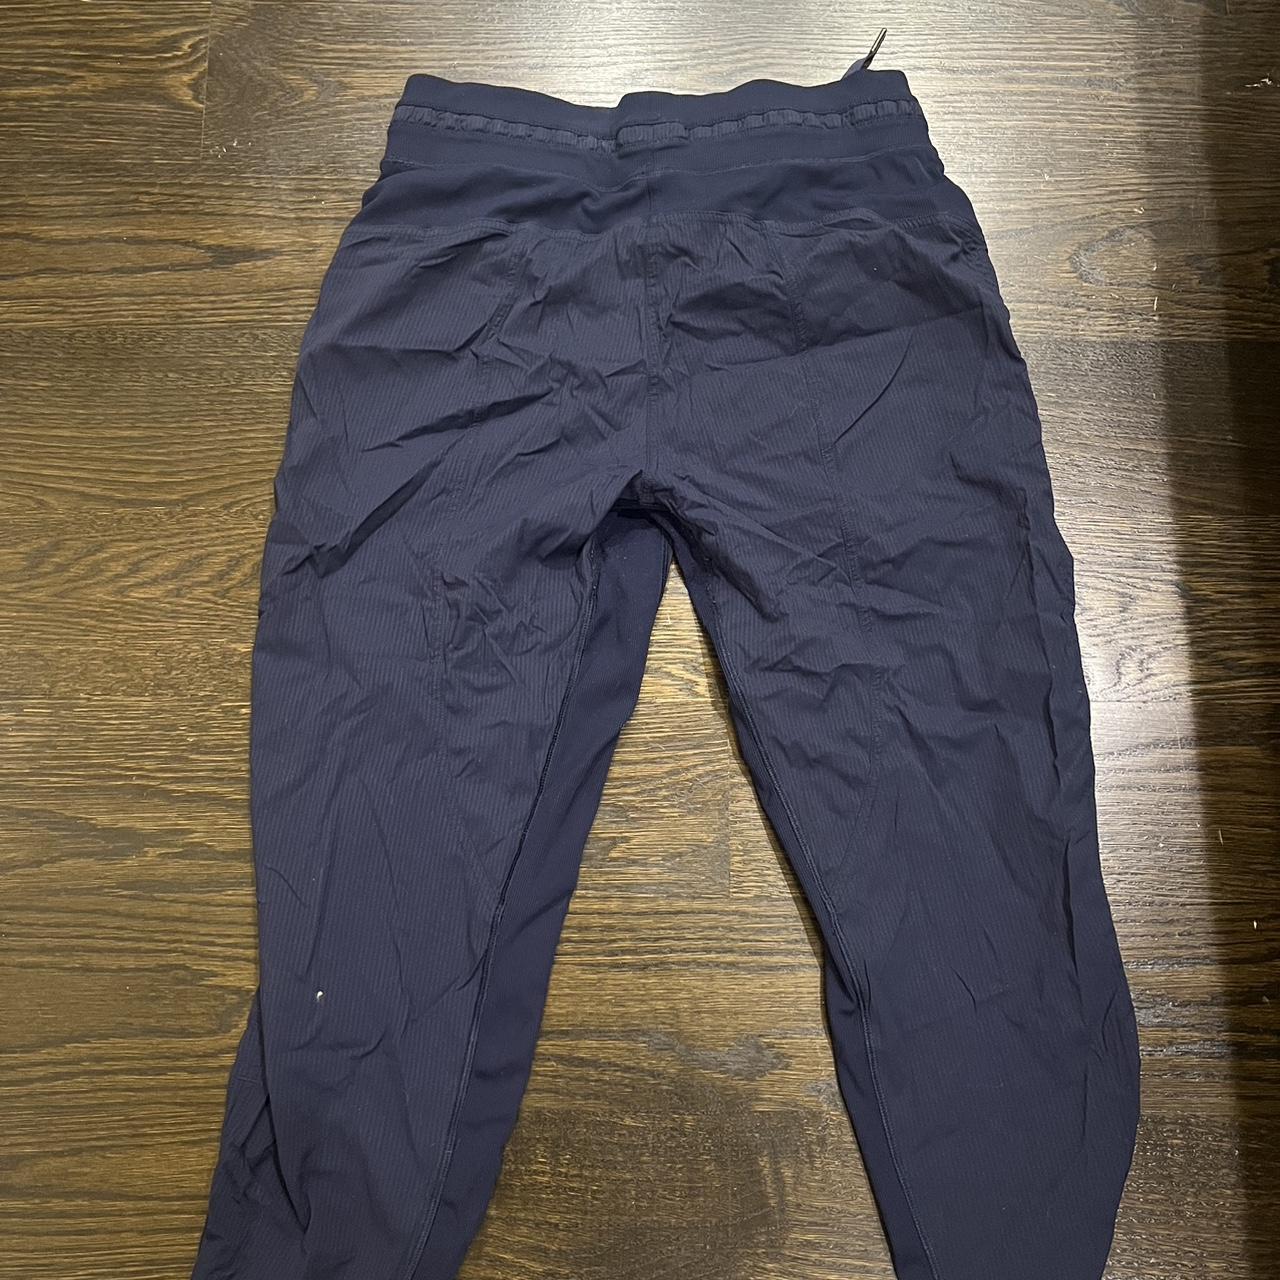 Navy blue lululemon cropped dance pants! Size 6. I - Depop